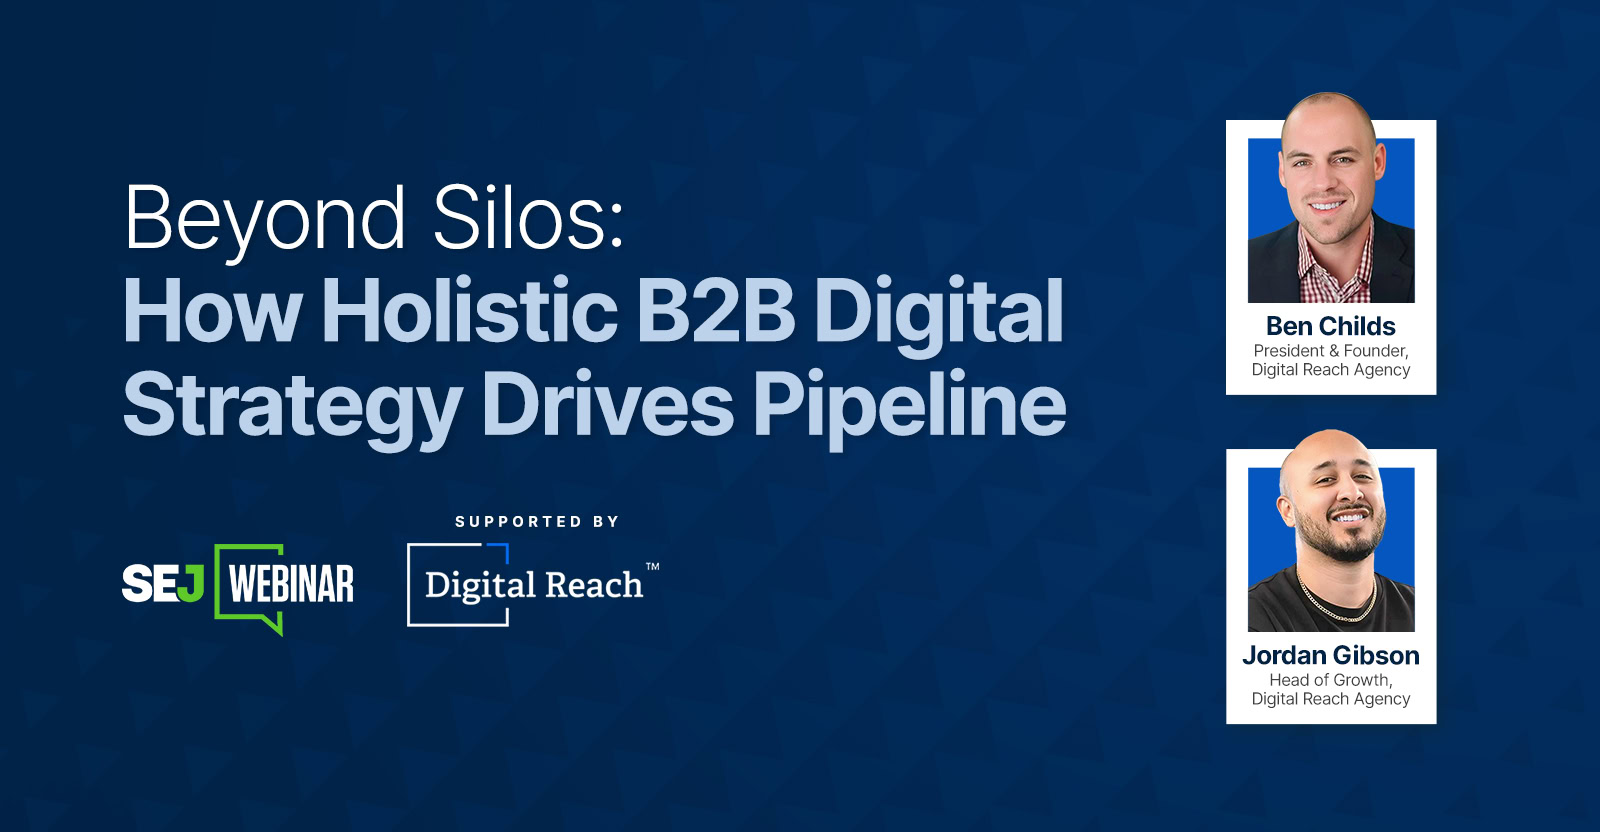 Holistic B2B Marketing: How To Drive Pipeline With A Silo-Free Strategy